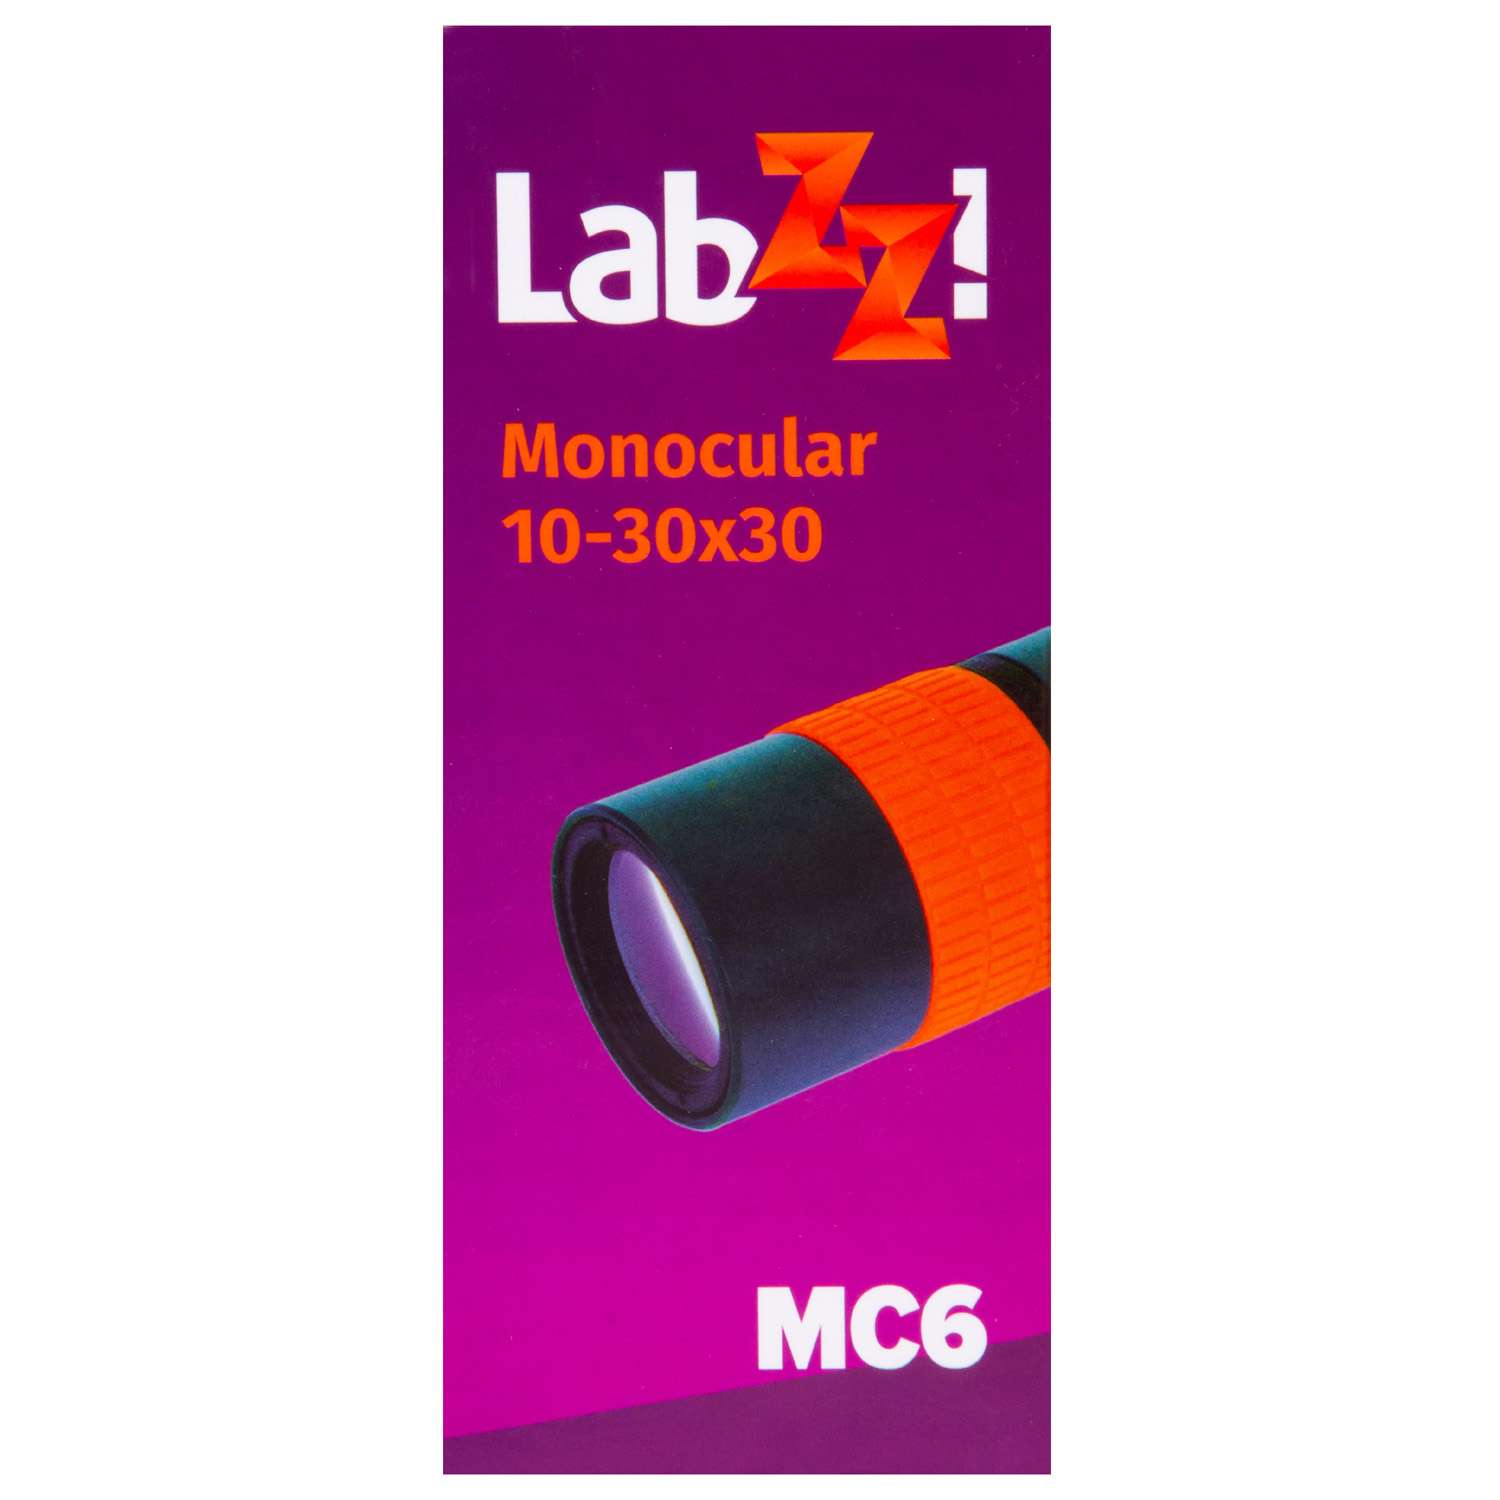 Монокуляр Levenhuk LabZZ MC6 - фото 12